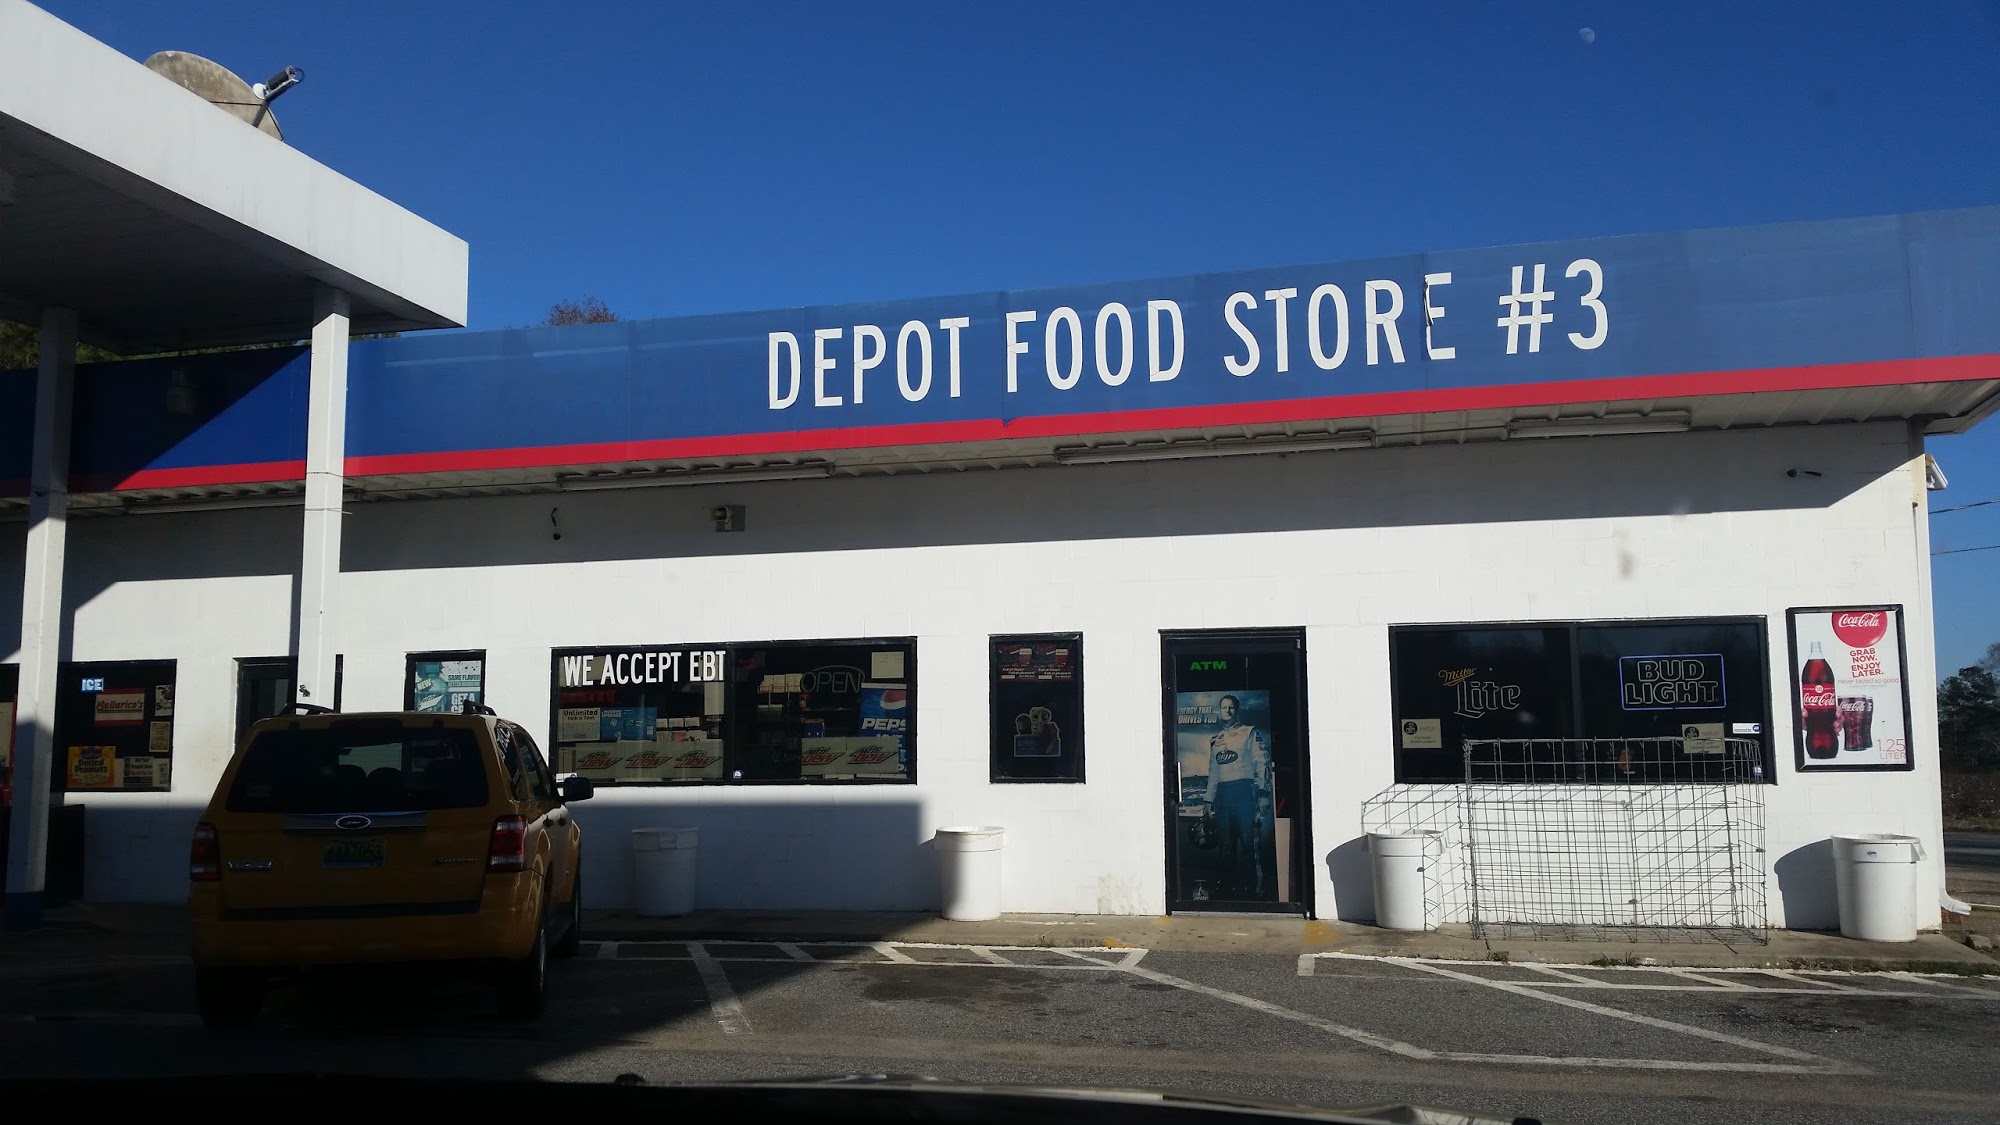 Depot Food Store #3